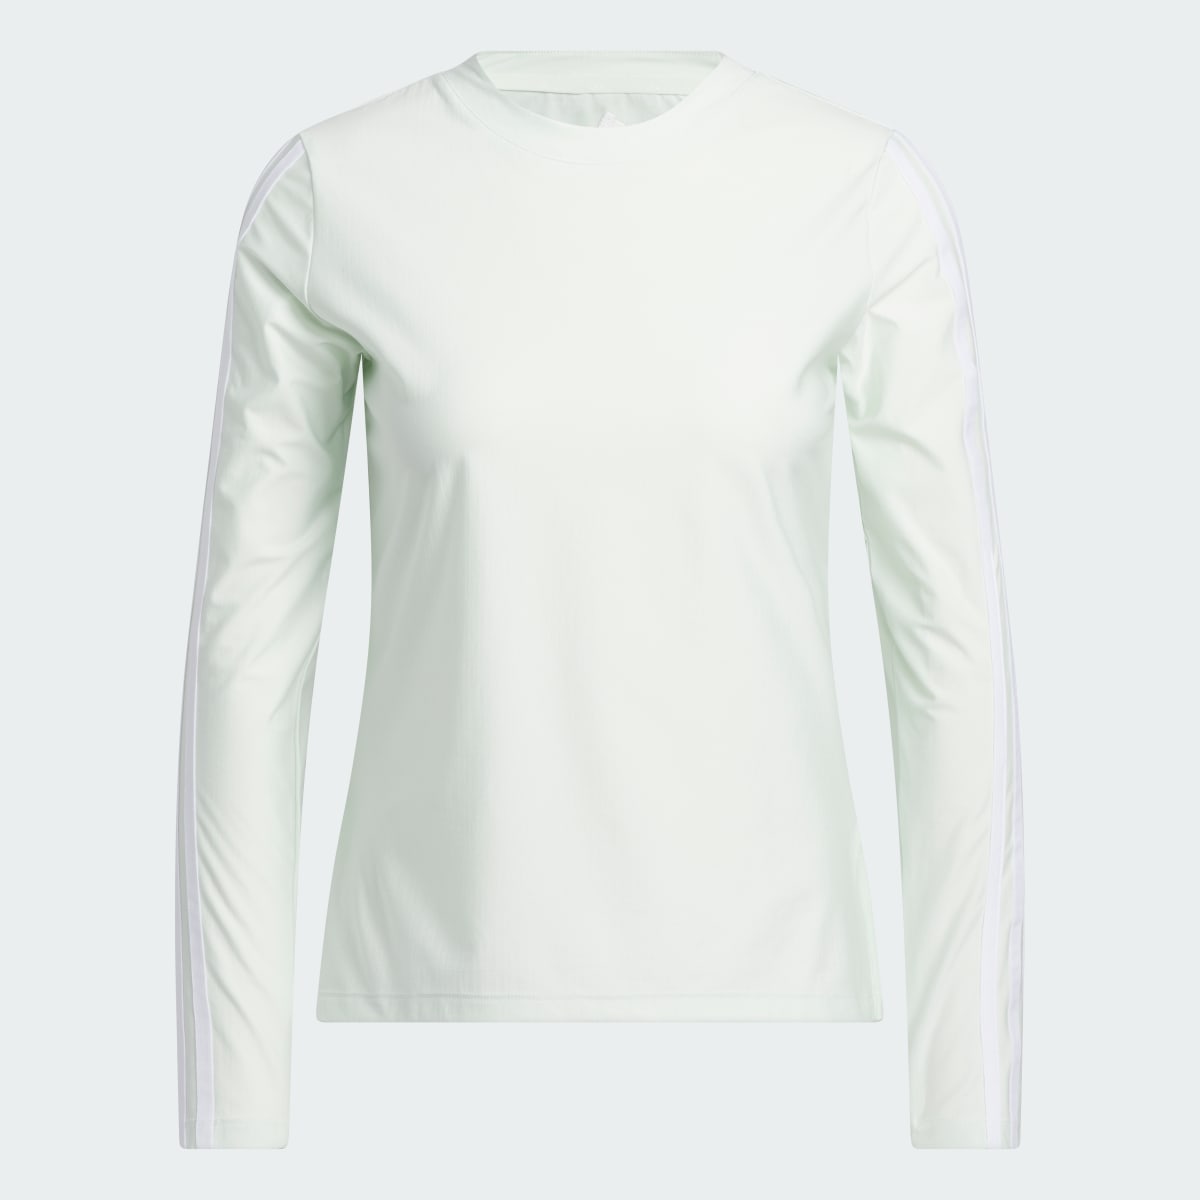 Adidas Women's Ultimate365 TWISTKNIT Long Sleeve Shirt. 5